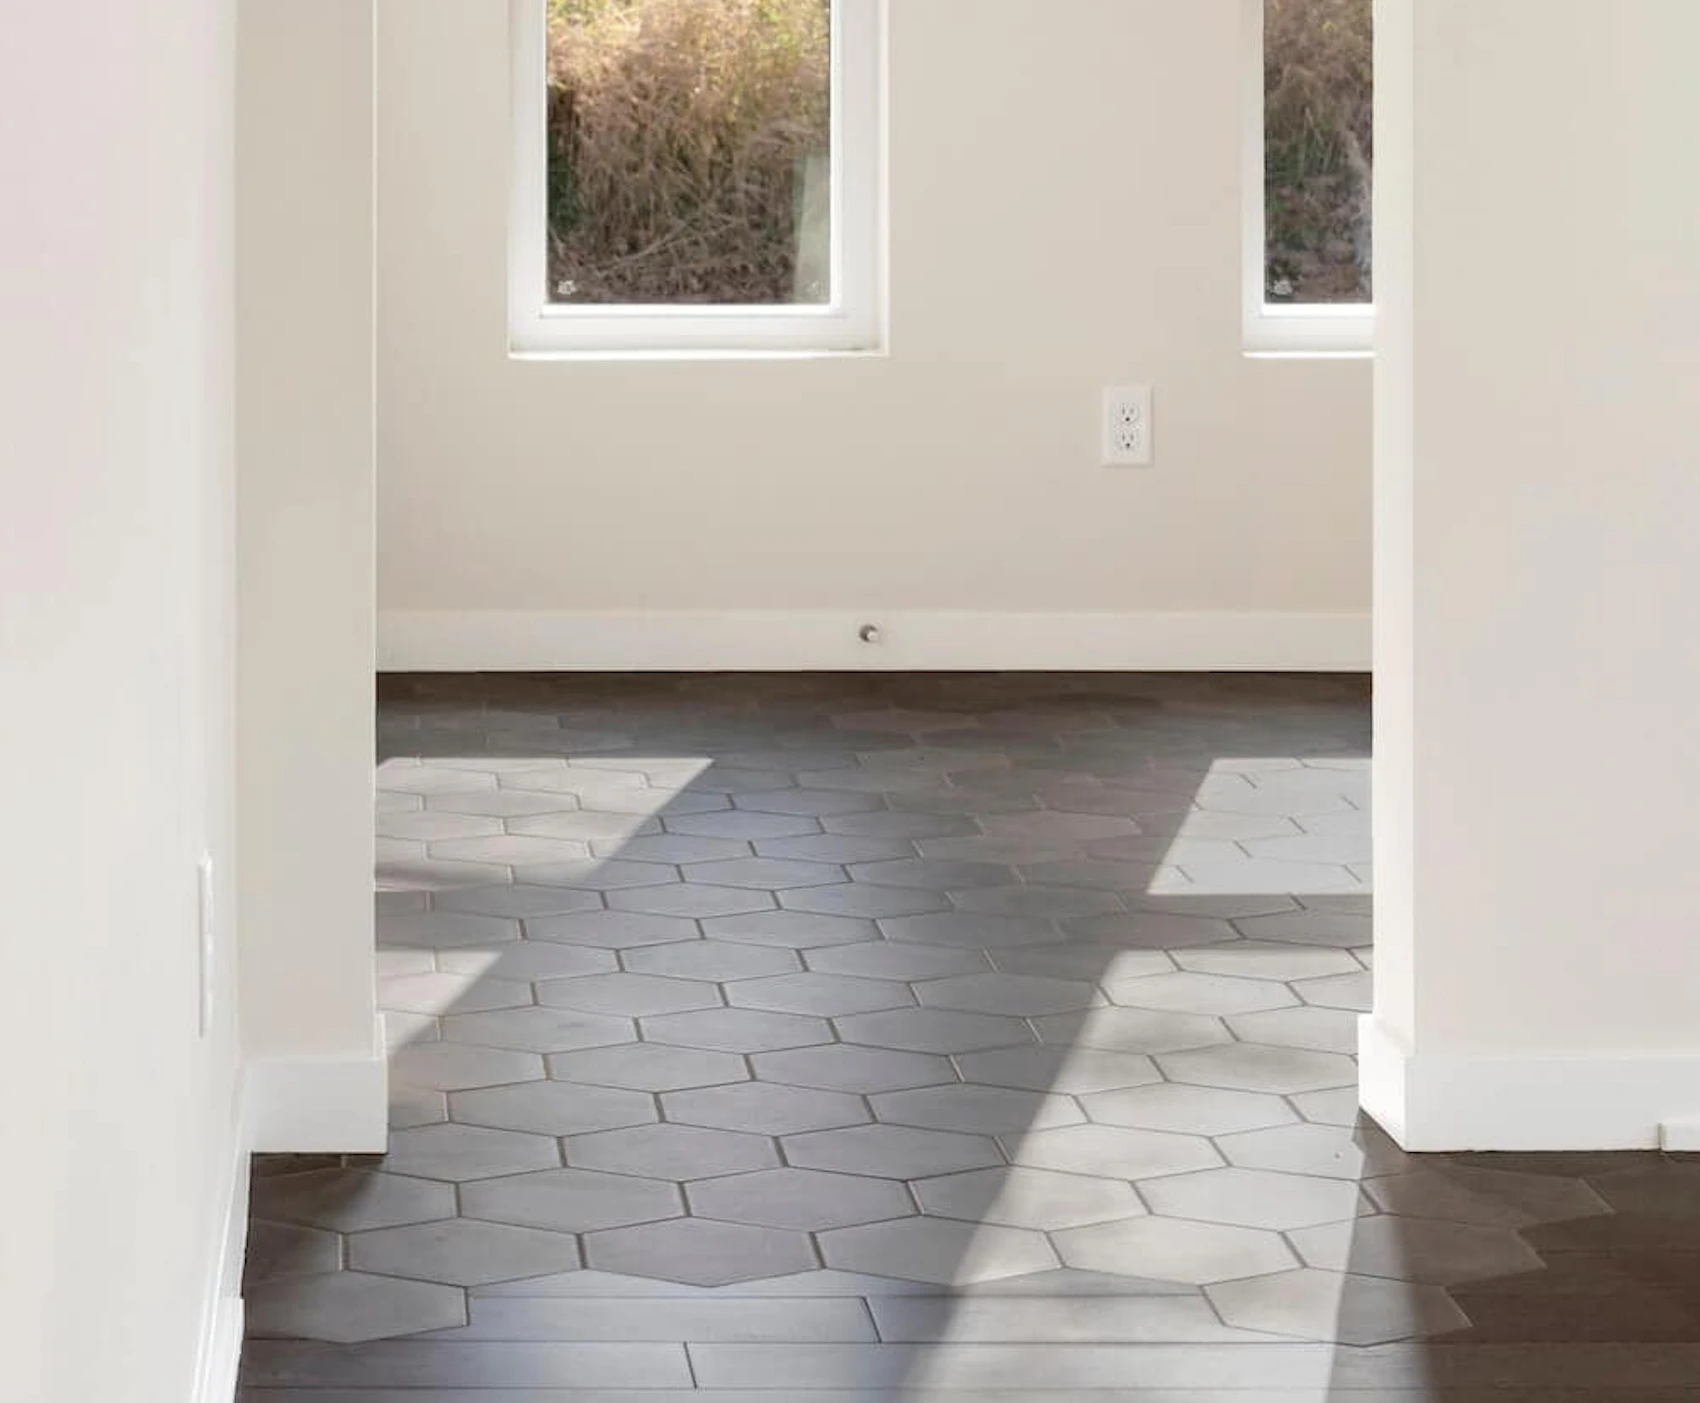 Tile and wood floor design